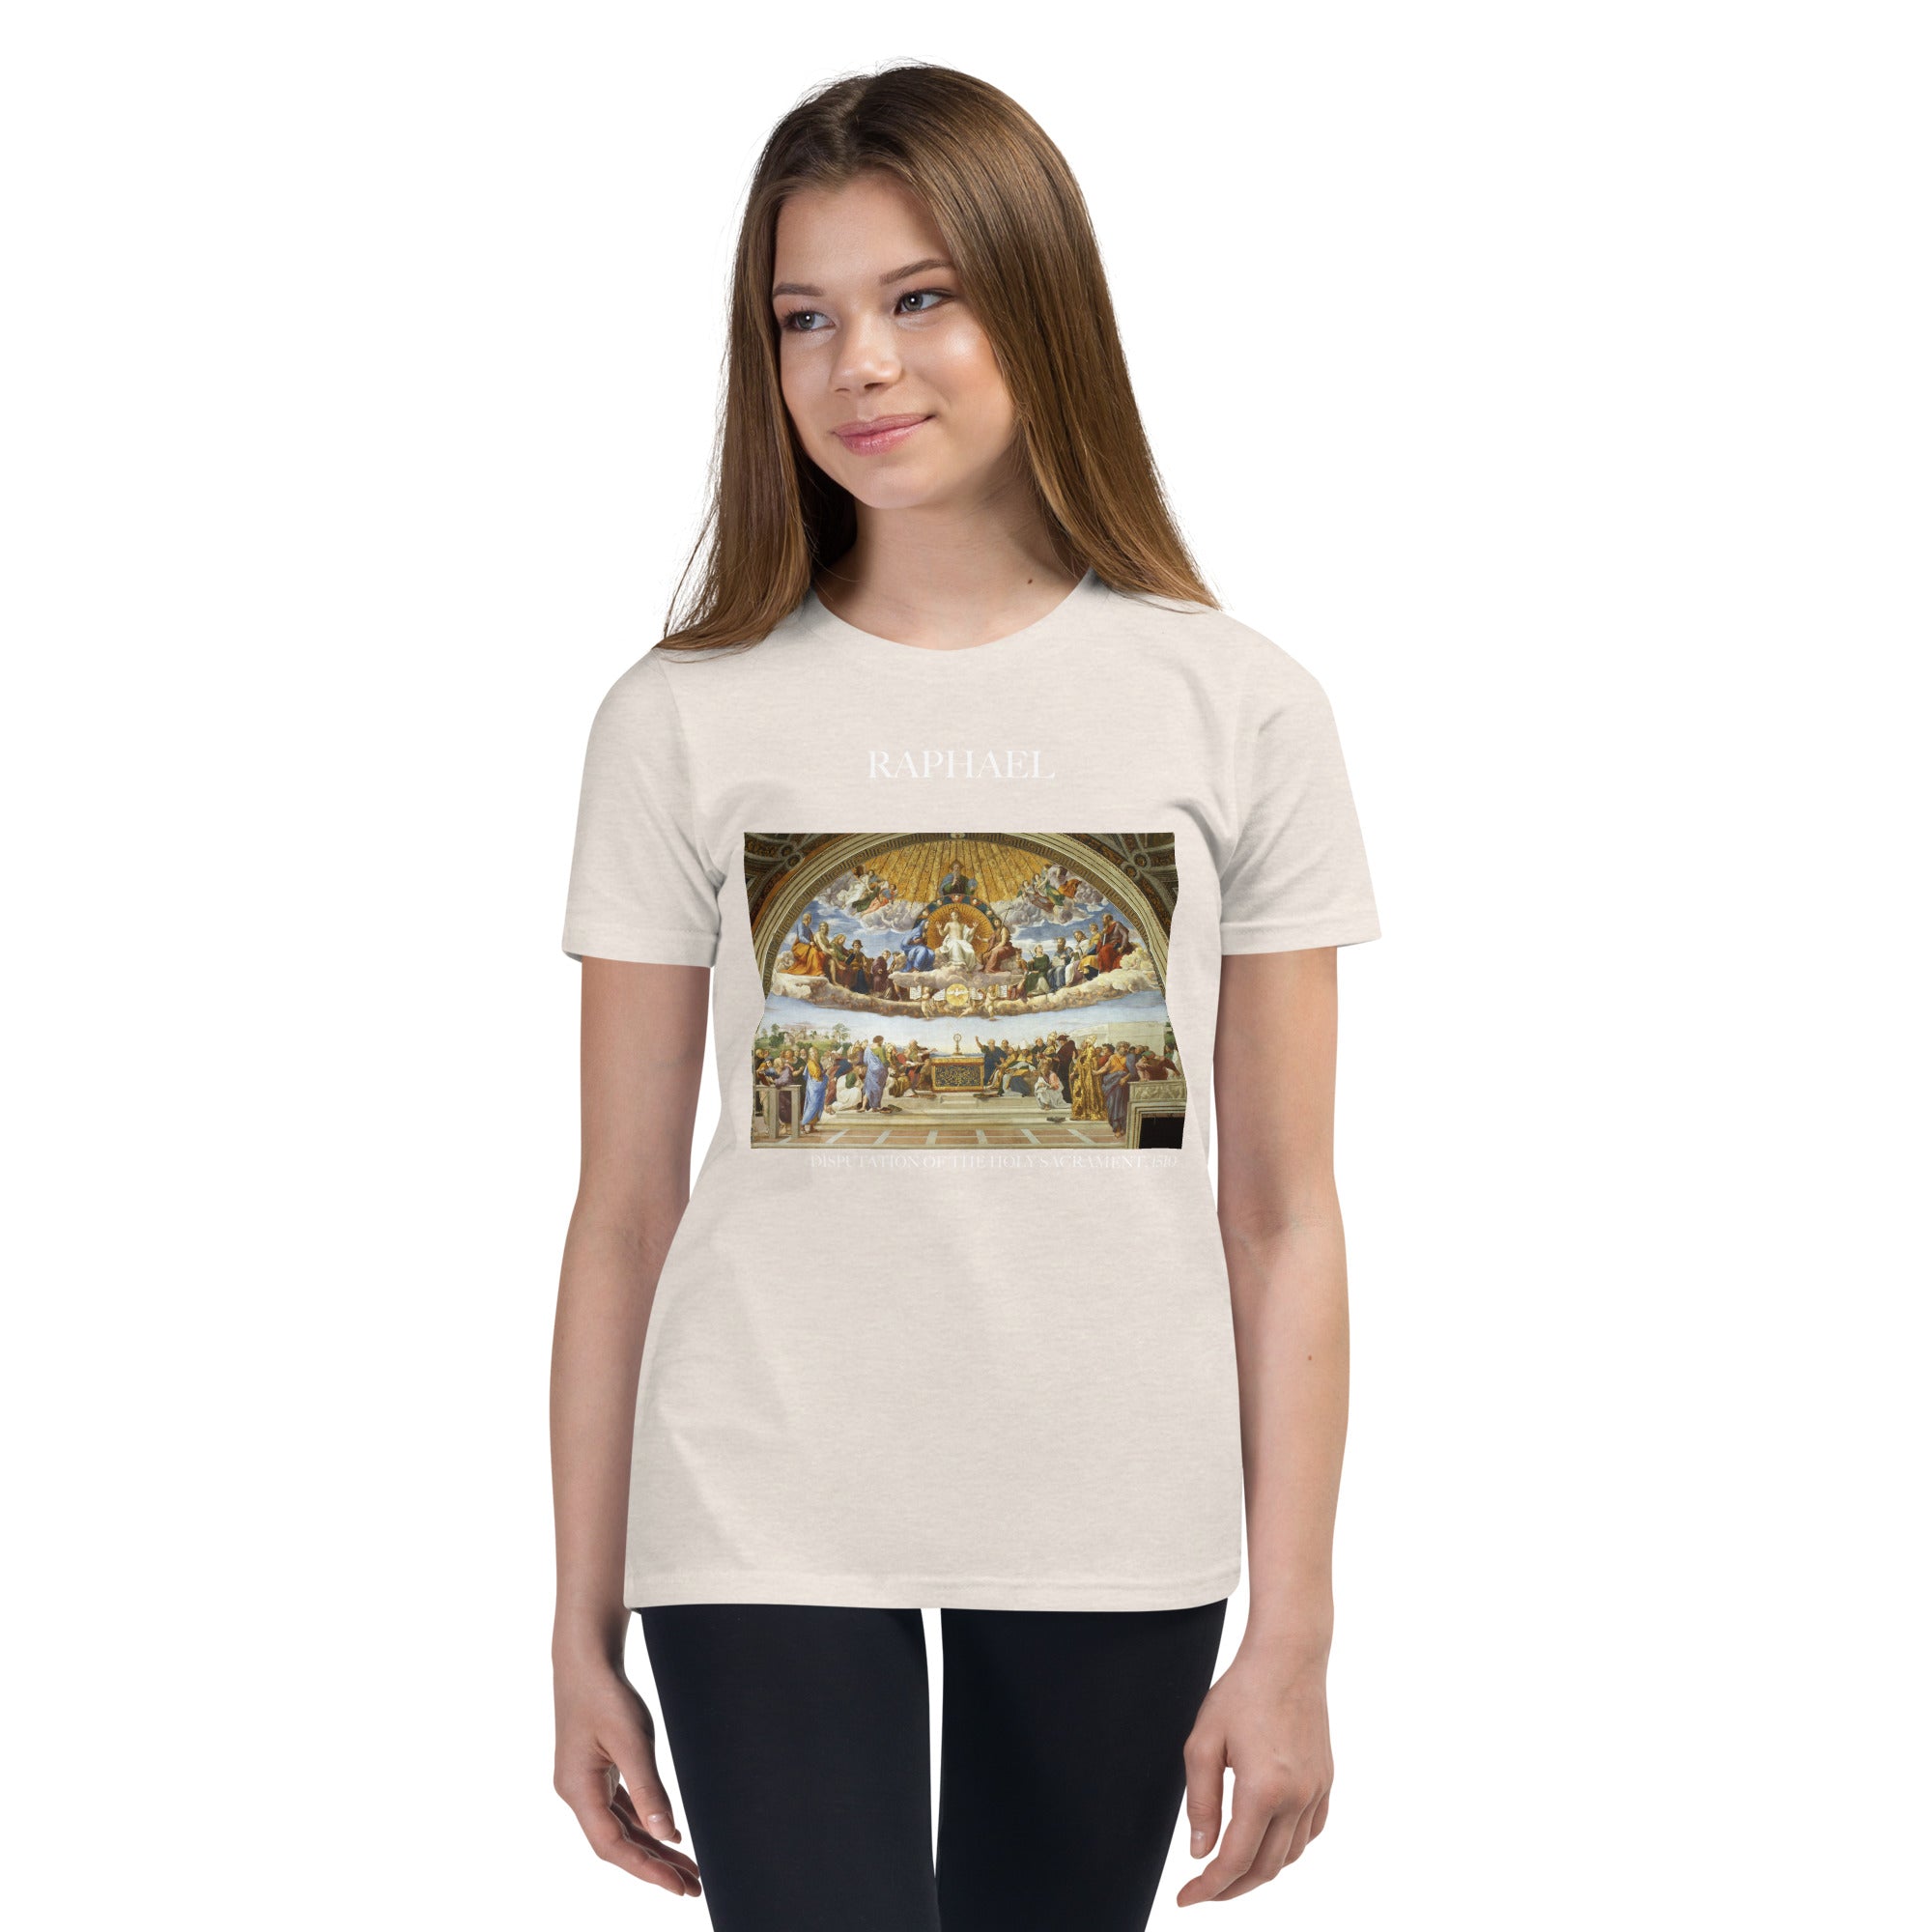 Raphael 'Disputation of the Holy Sacrament' Famous Painting Short Sleeve T-Shirt | Premium Youth Art Tee